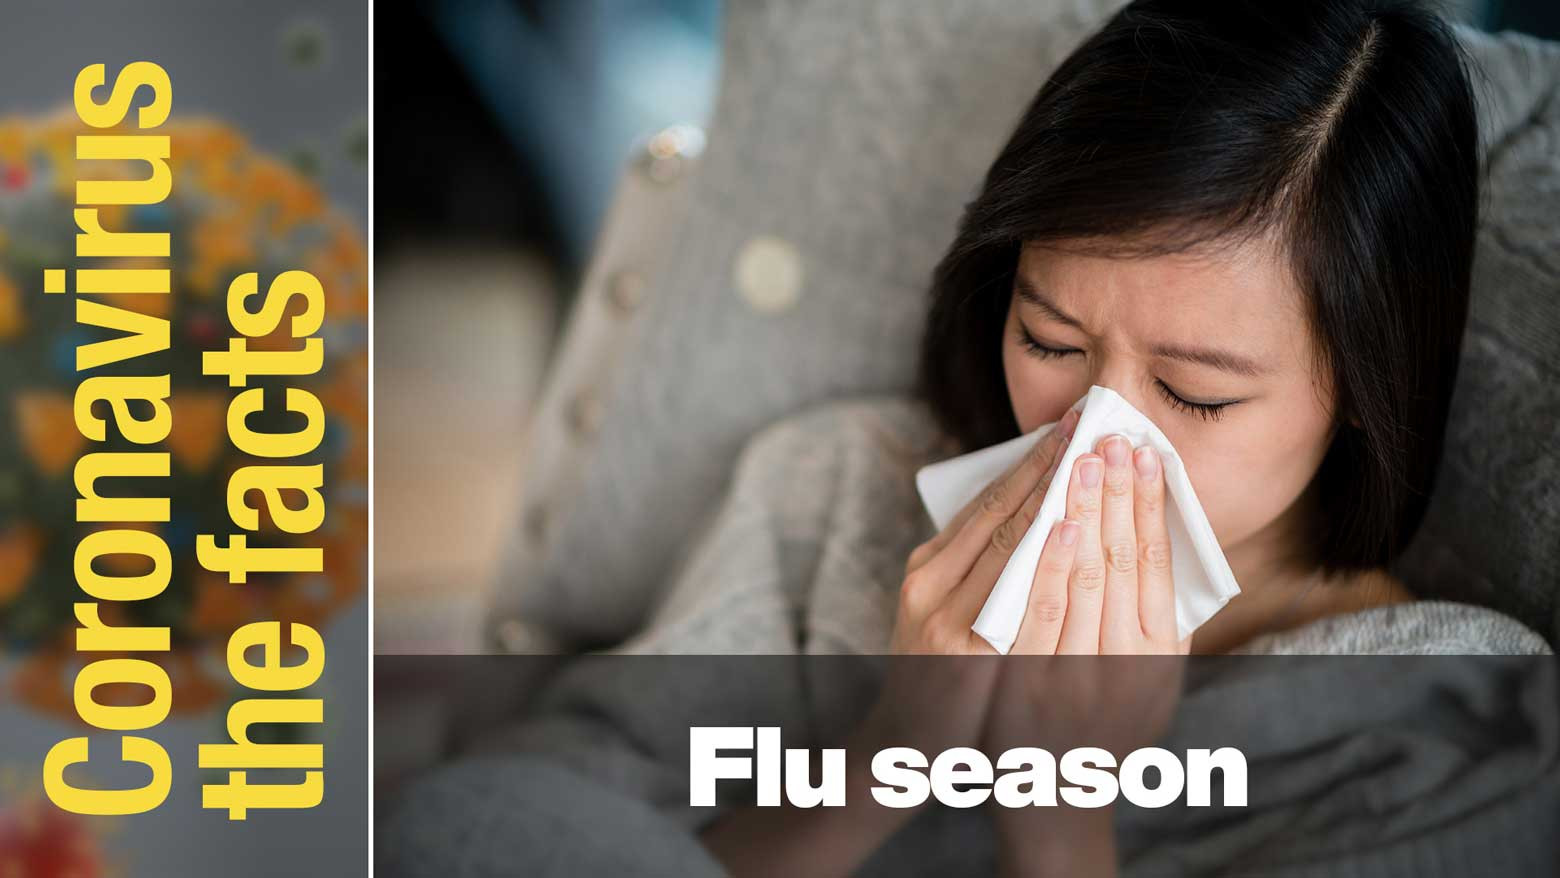 How will Japan tackle flu season amid the coronavirus pandemic?